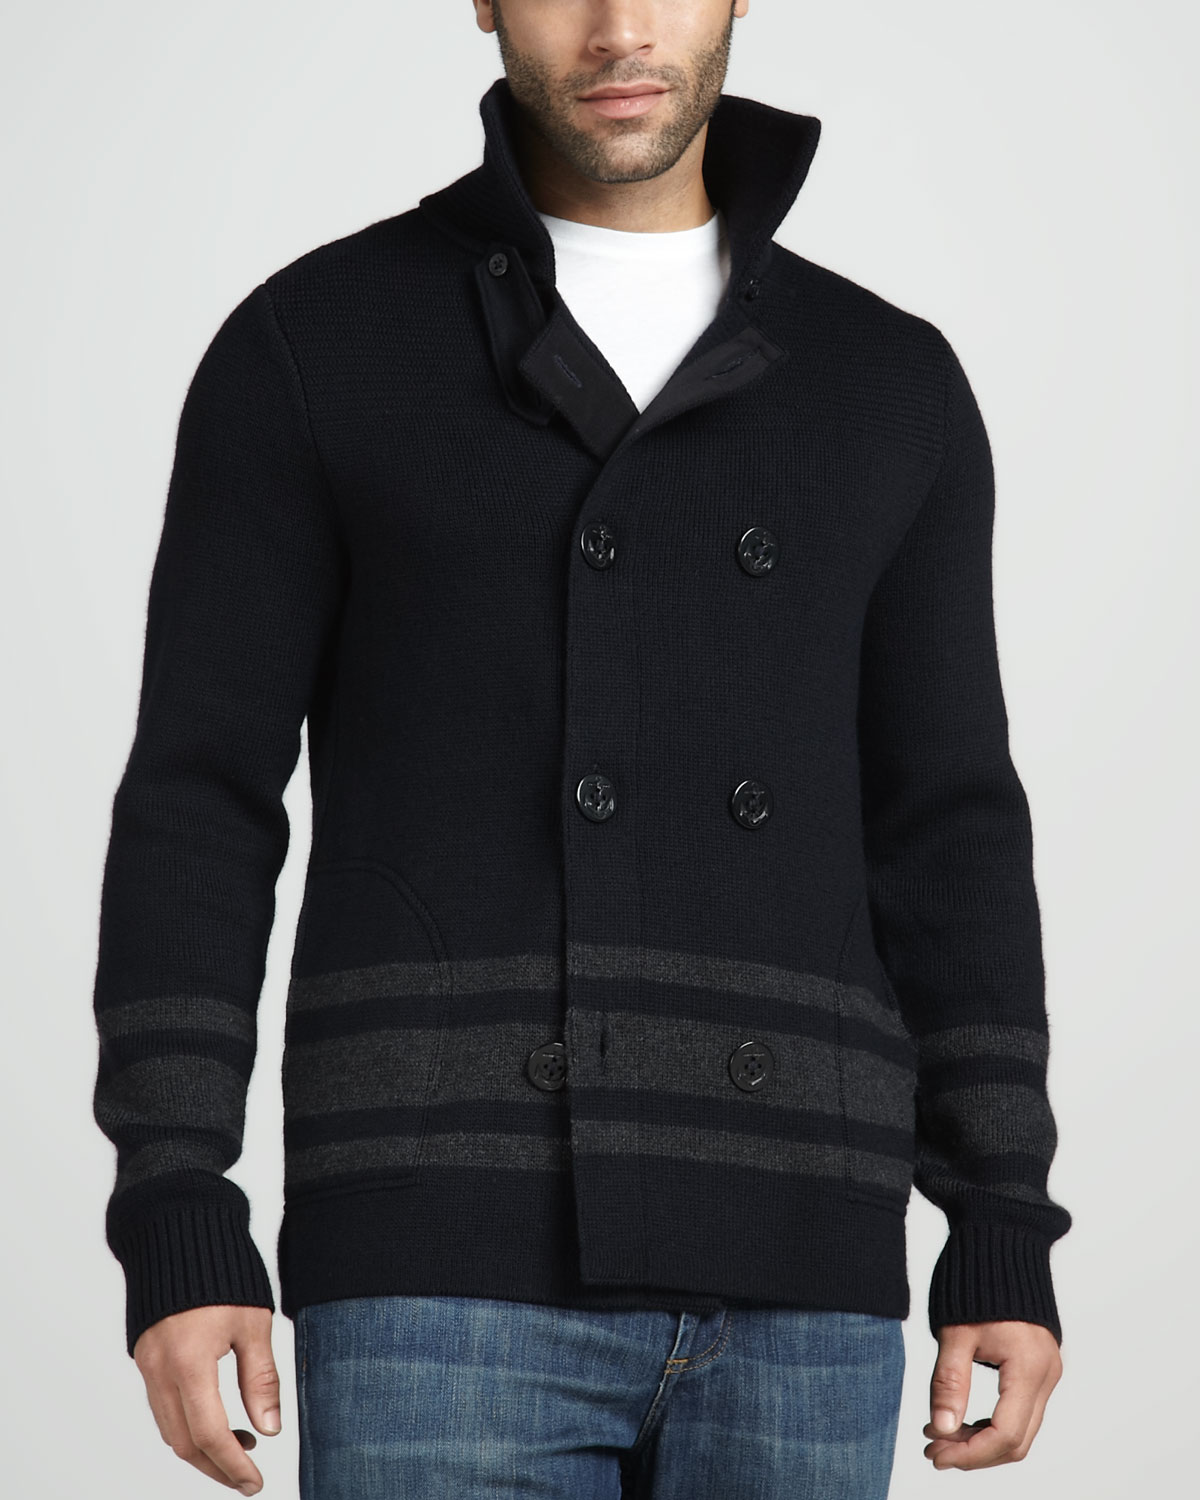 Lyst - Vince Striped Wool Pea Coat Sweater in Black for Men